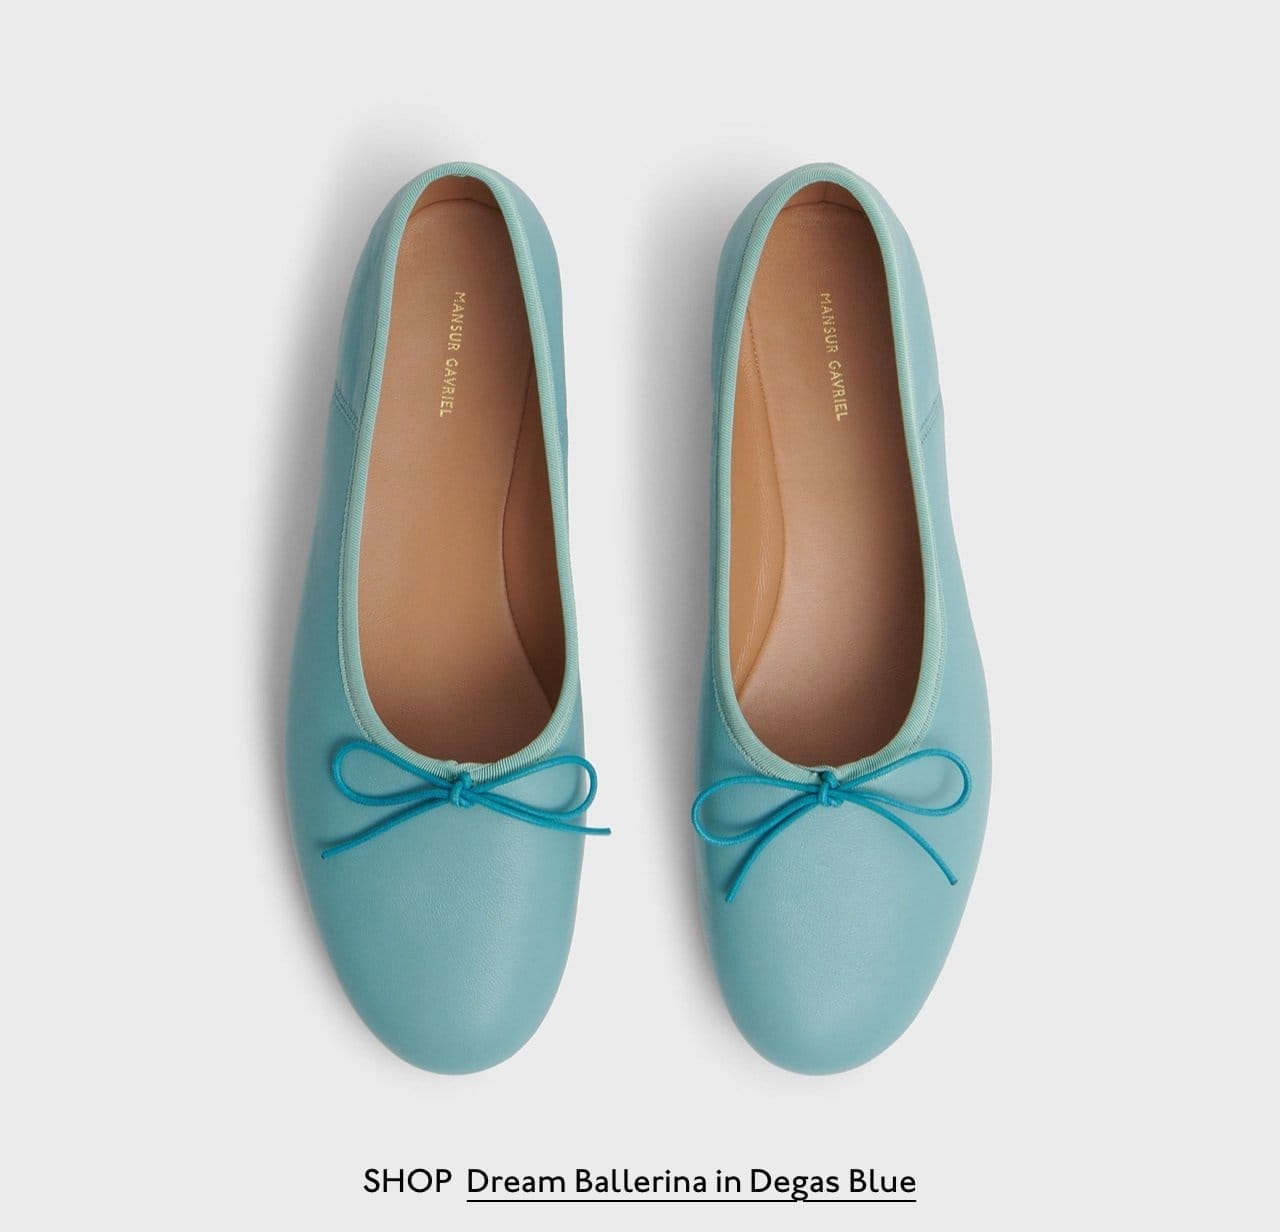 Shop Dream Ballerina in Degas Blue.